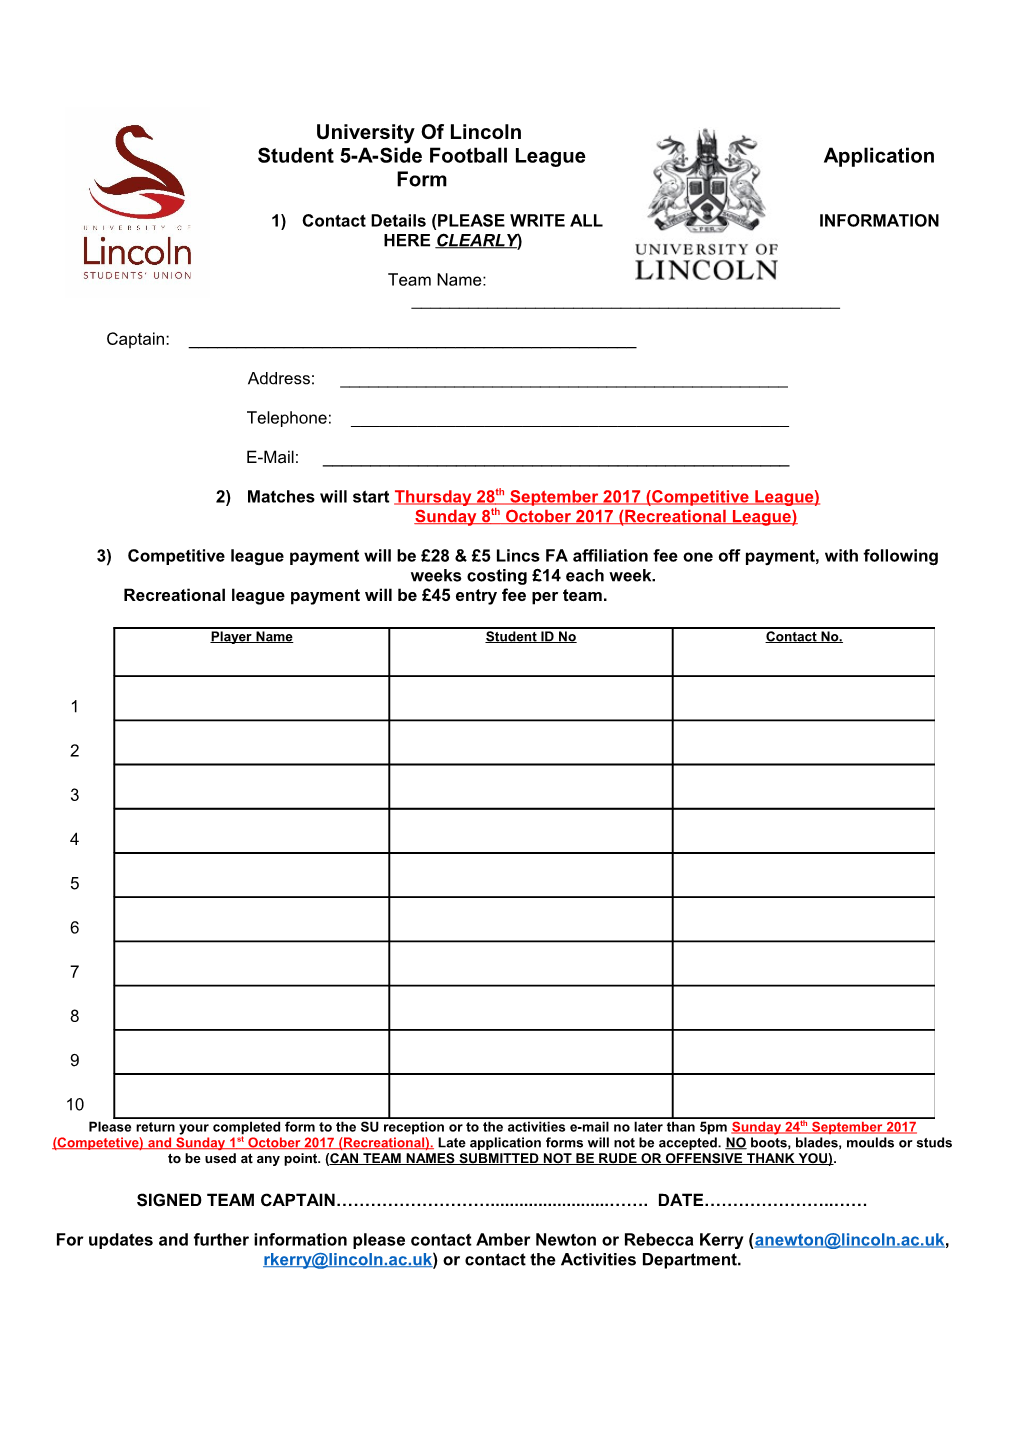 Student 5-A-Side Football League Application Form